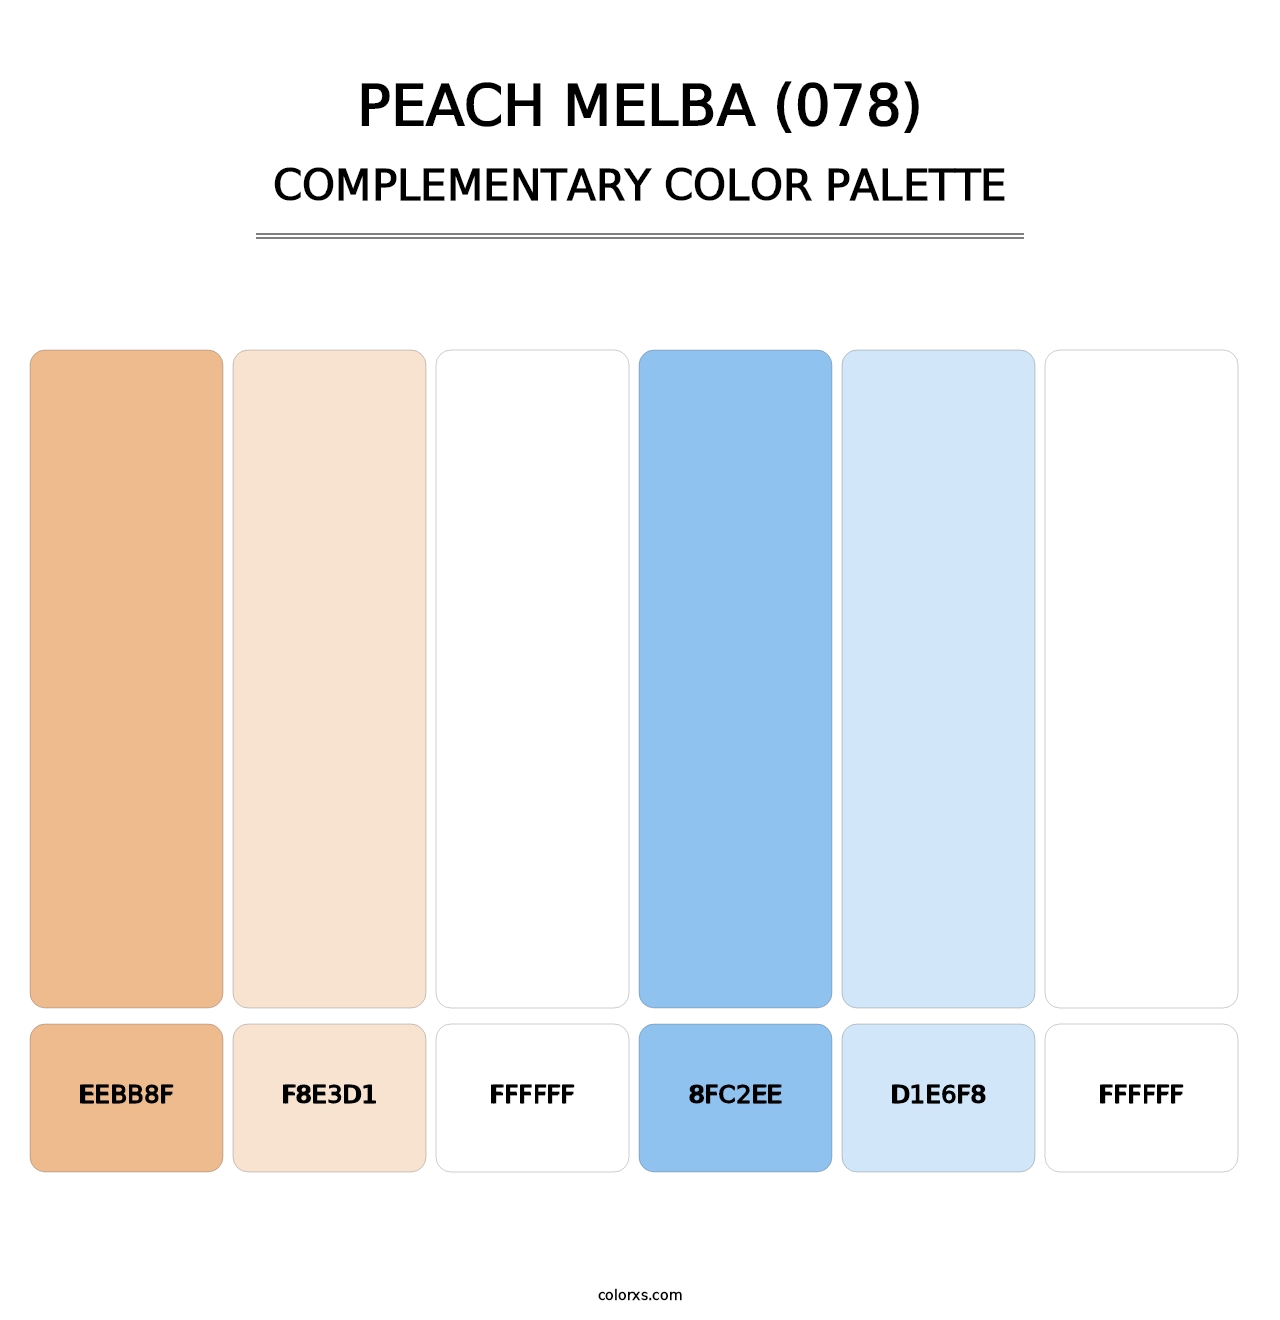 Peach Melba (078) - Complementary Color Palette